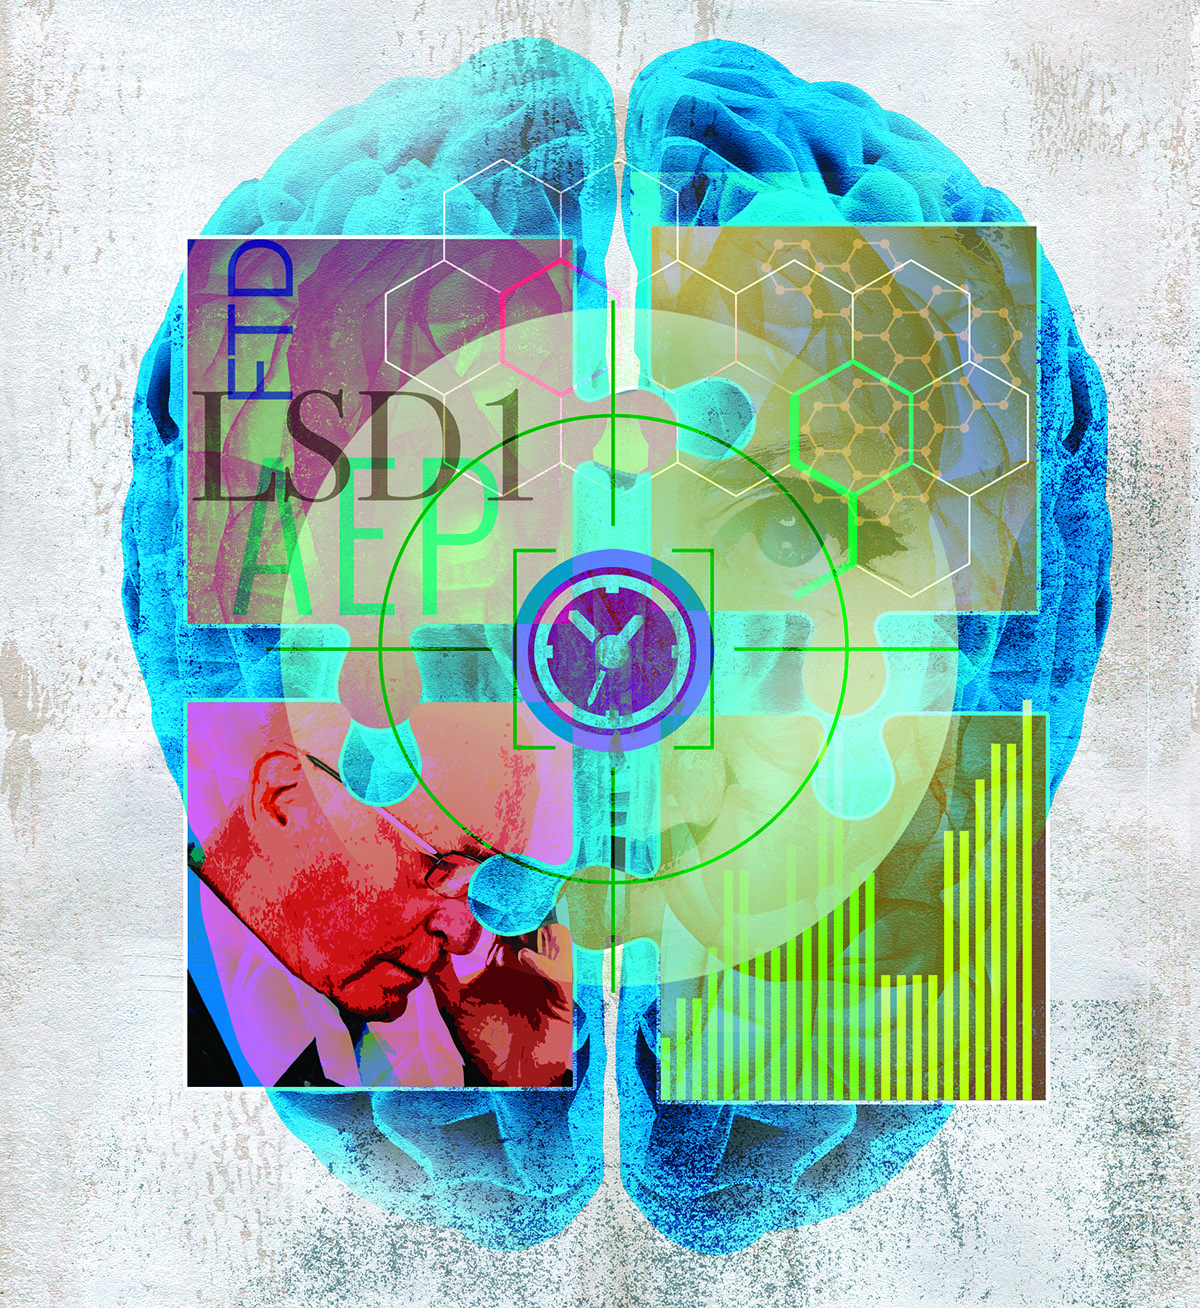 Illustration of the brain